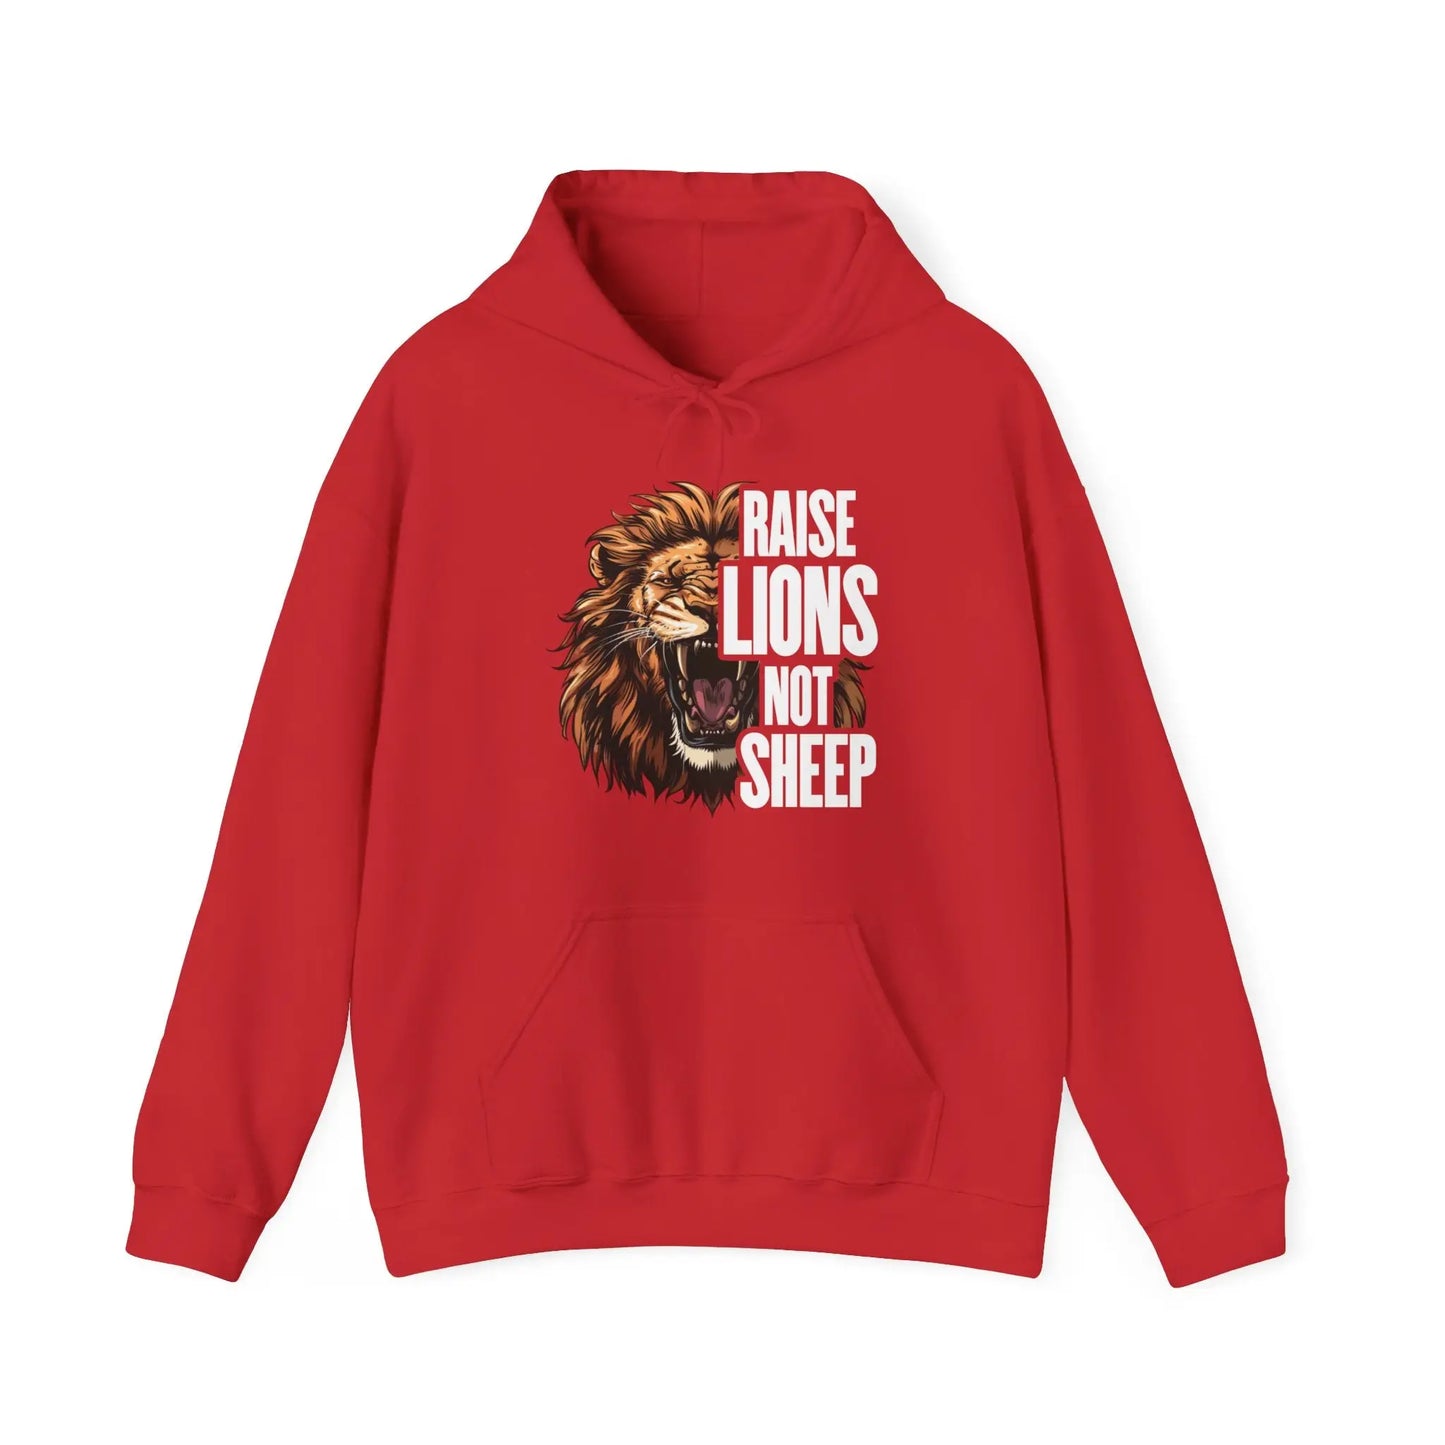 Raise Lions Not Sheep Men's Hooded Sweatshirt - Wicked Tees